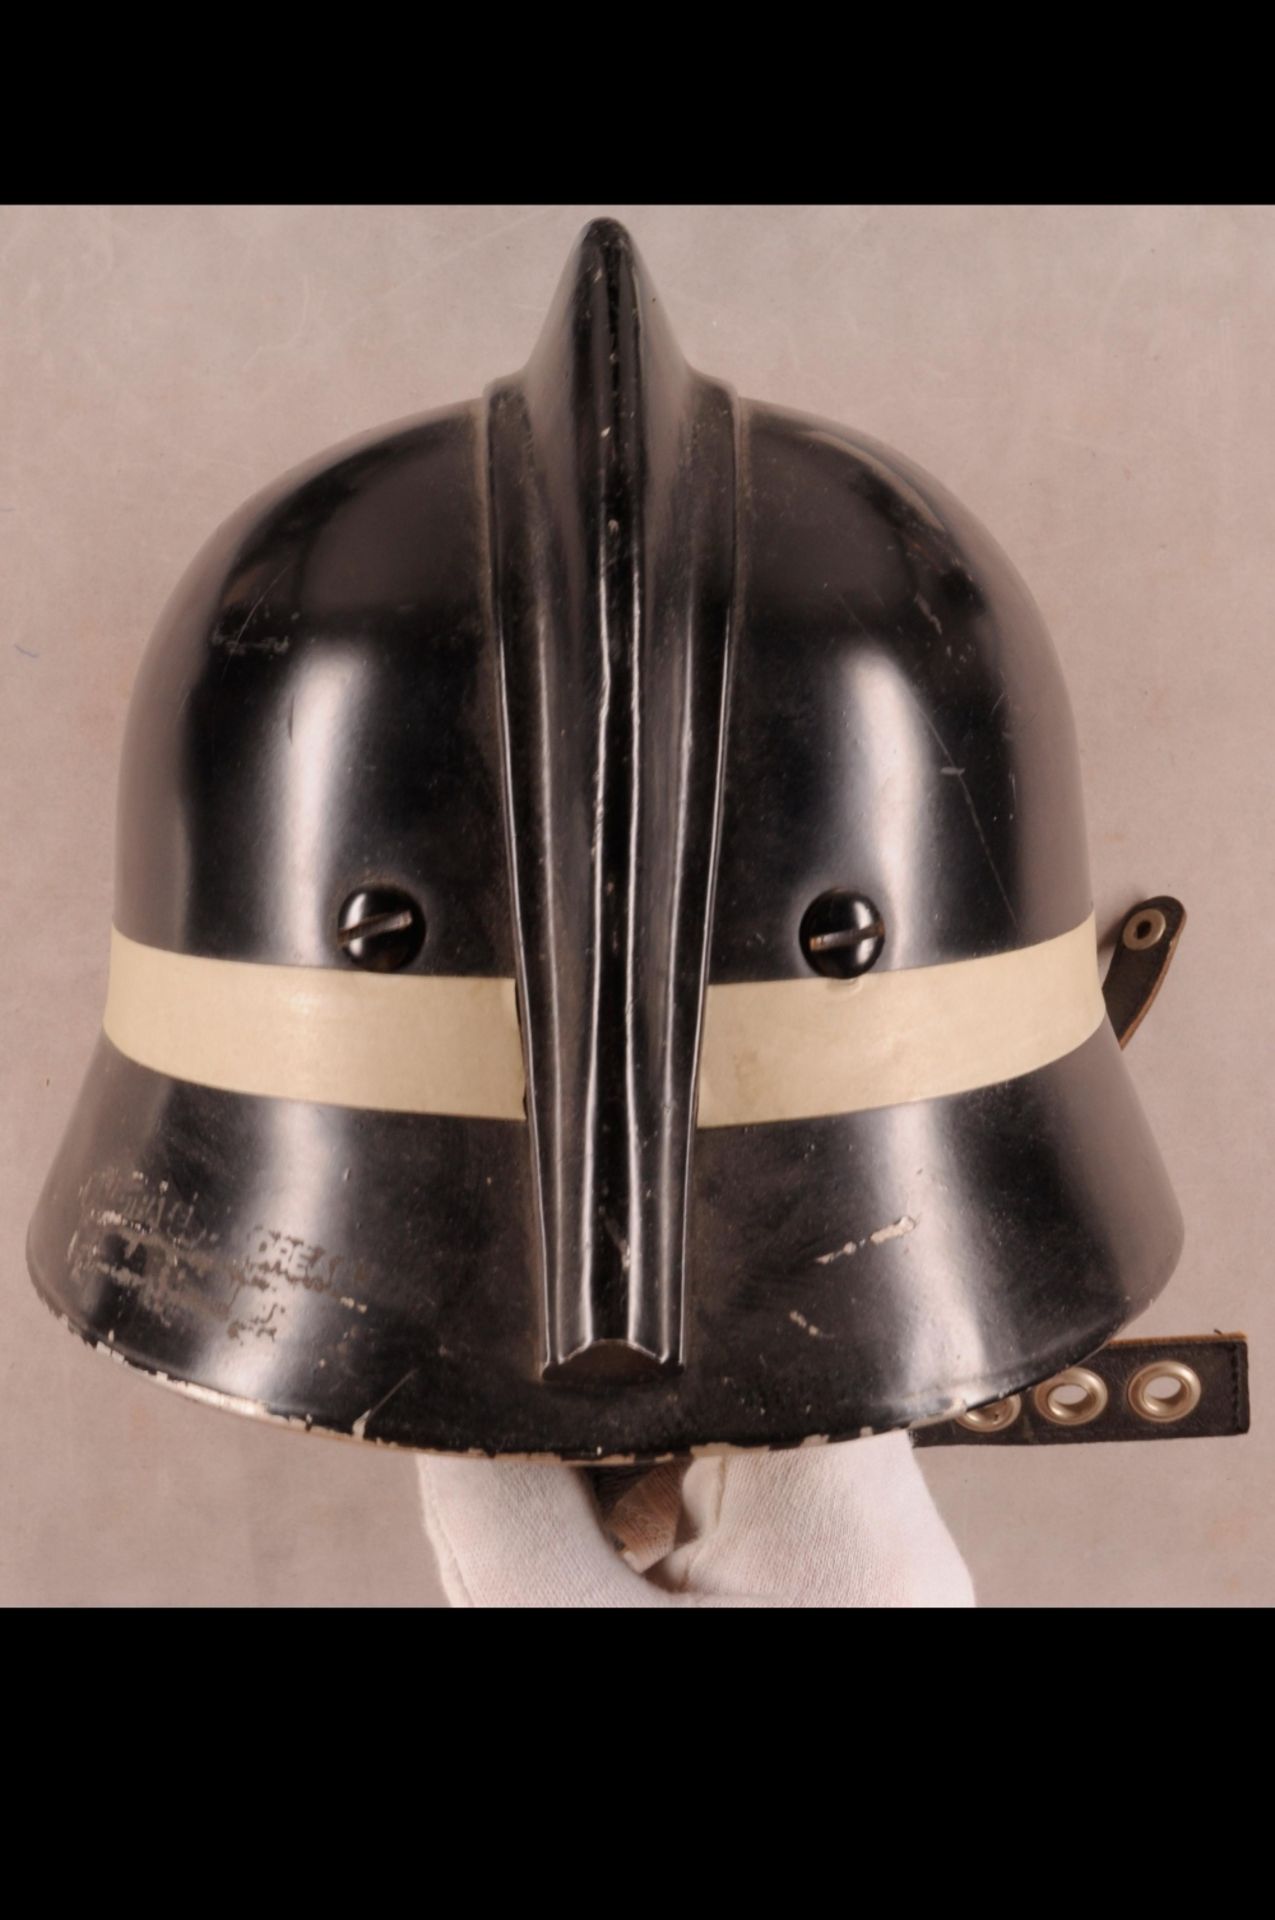 Fire-brigade / Police, estate with 13 x peaked cap, 4 x stem cap, 5 x helmet, 13 x uniforms / - Image 57 of 118